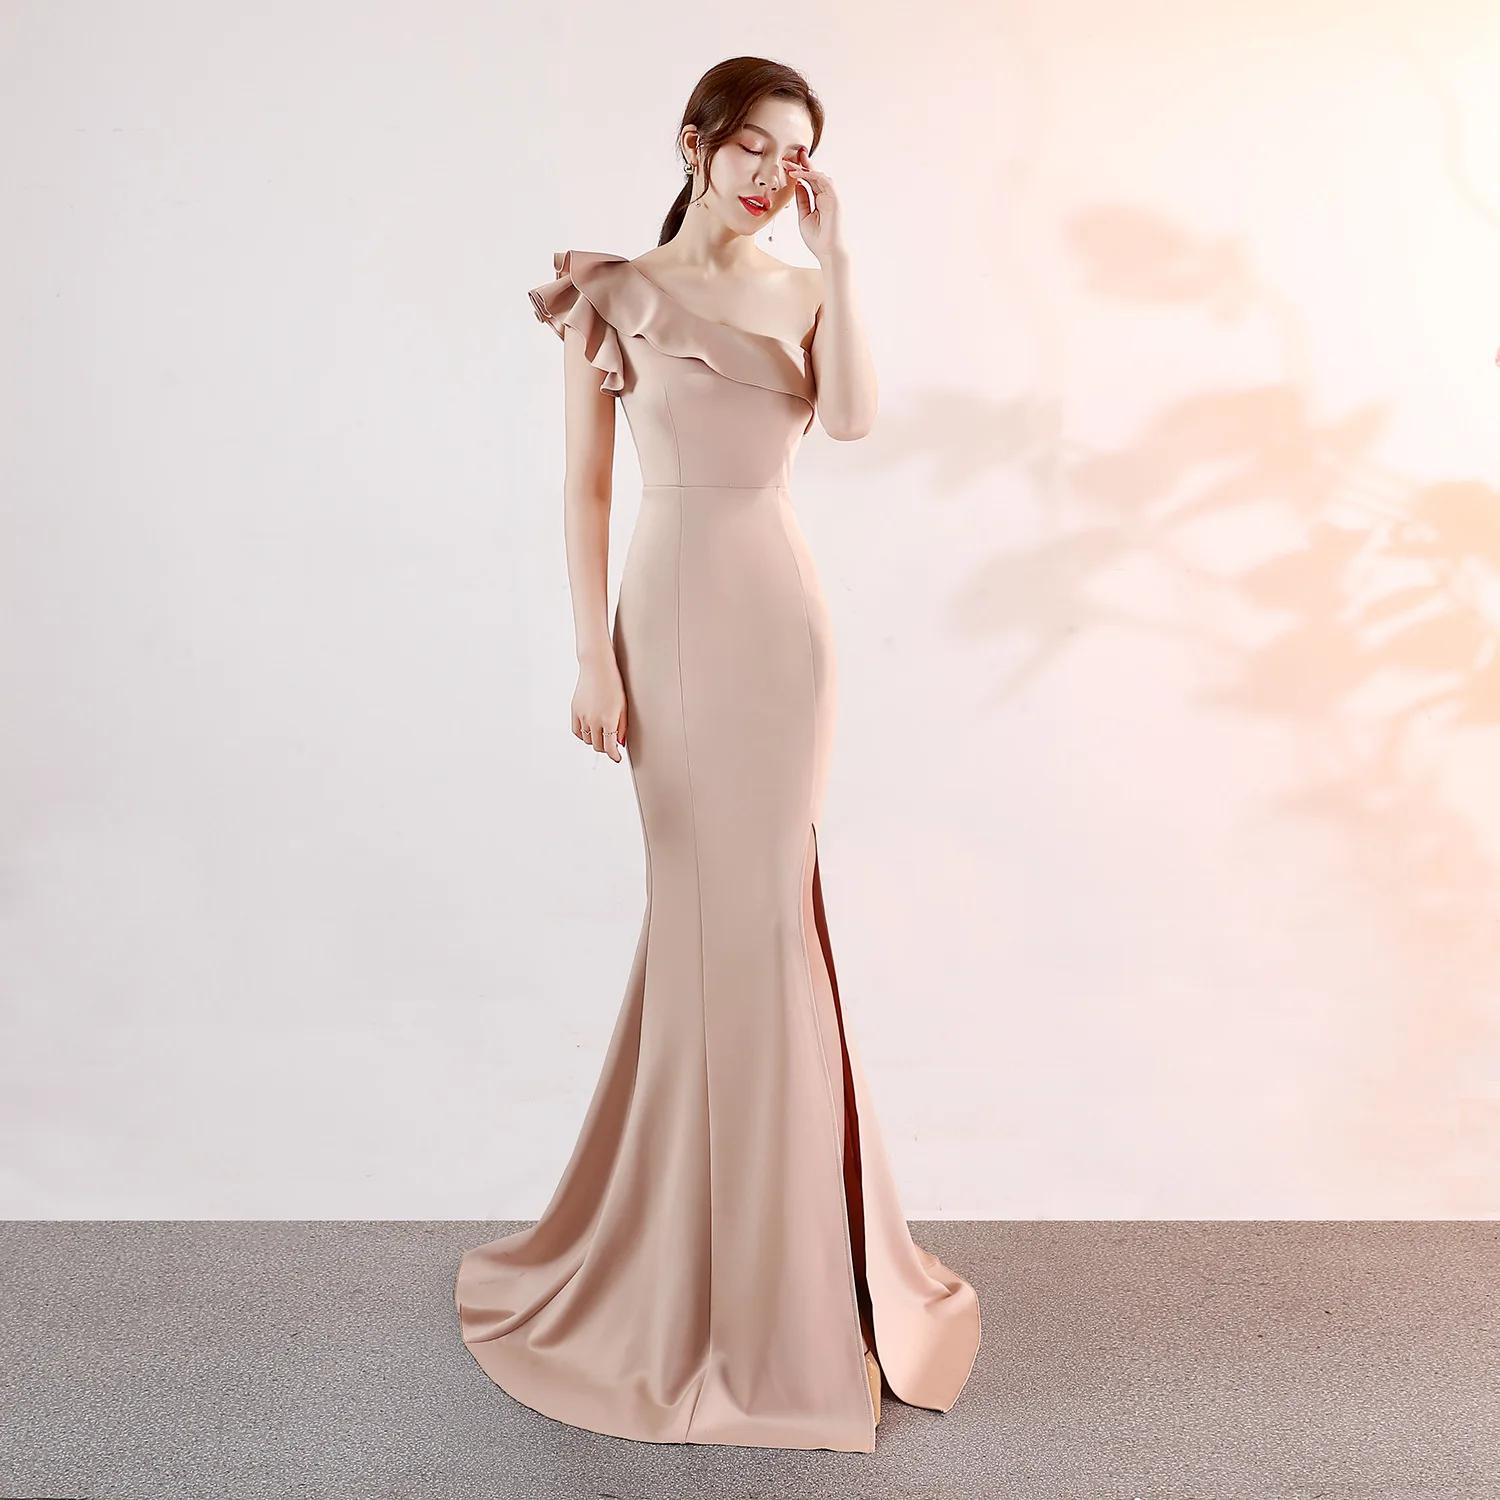 Elegant Asymmetric Design Style Women Long Prom Dresses Solid Color One Shoulder Ruffle Evening Gown Wears Split Skirt